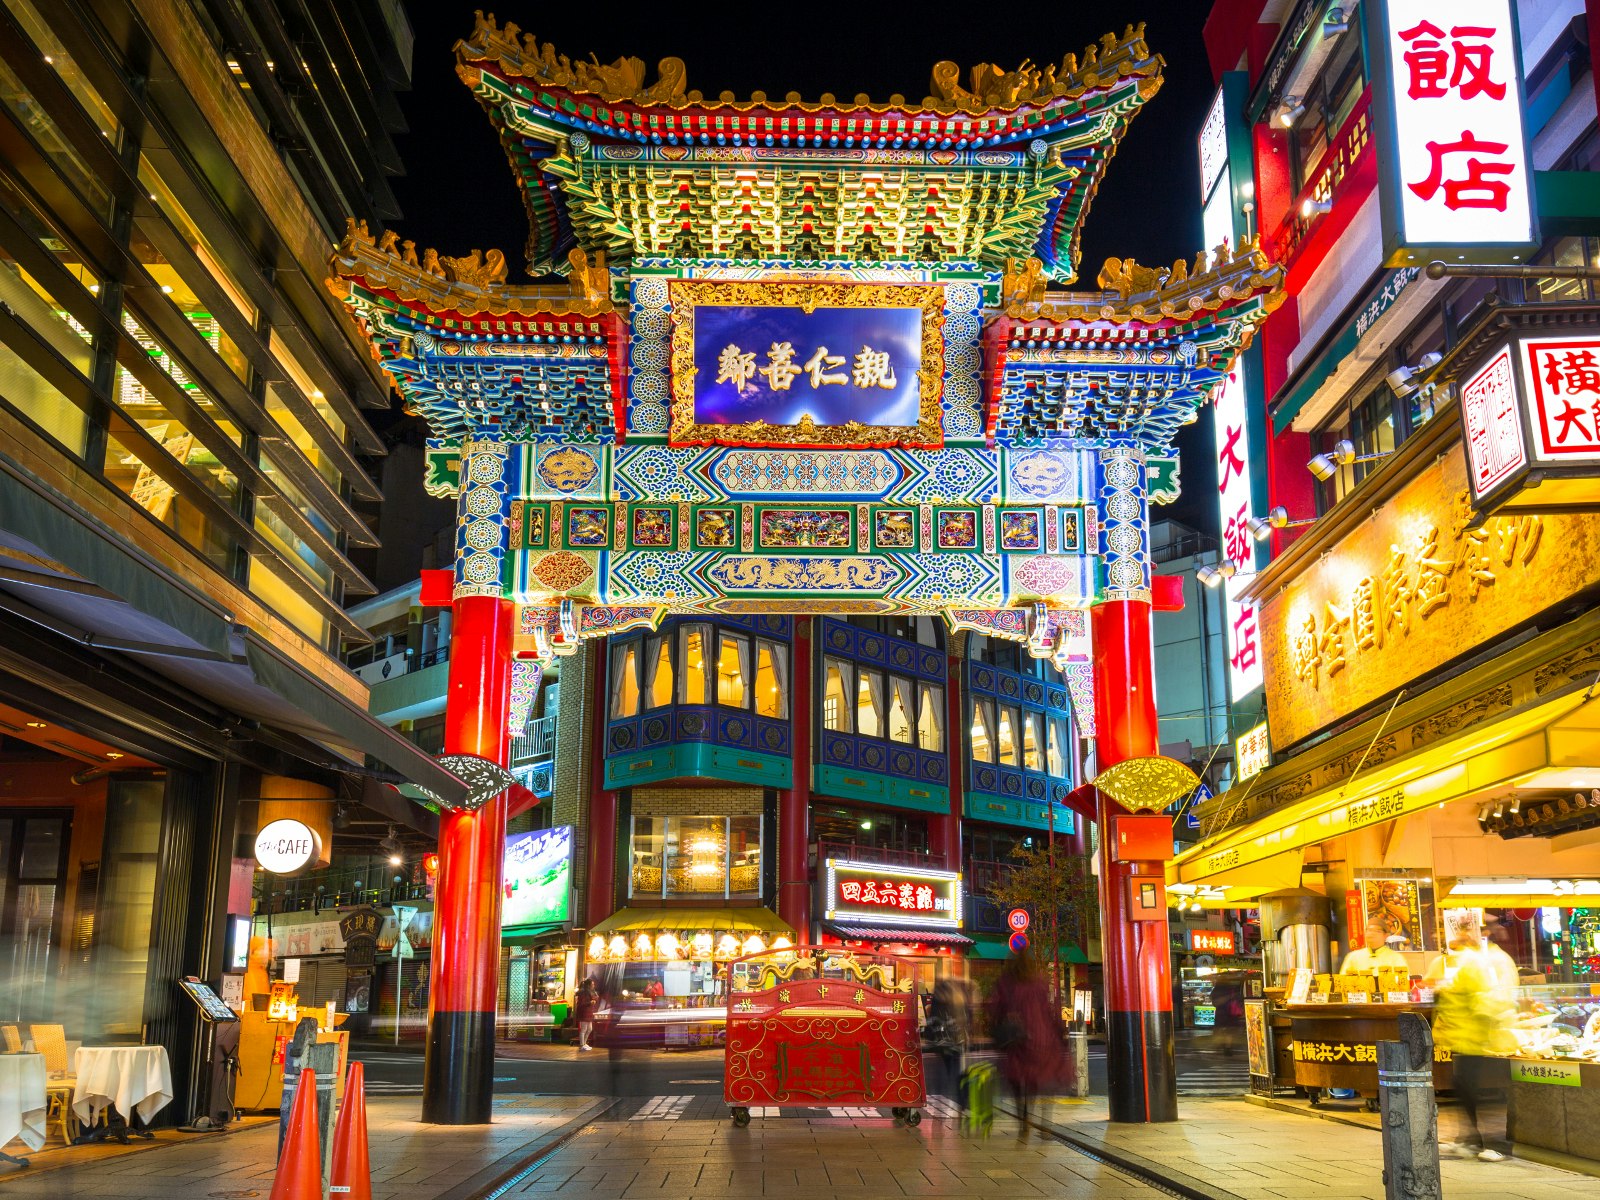 The ornate entrance gate to Yokohama's Chinatown district © Patryk Kosmider / Shutterstock